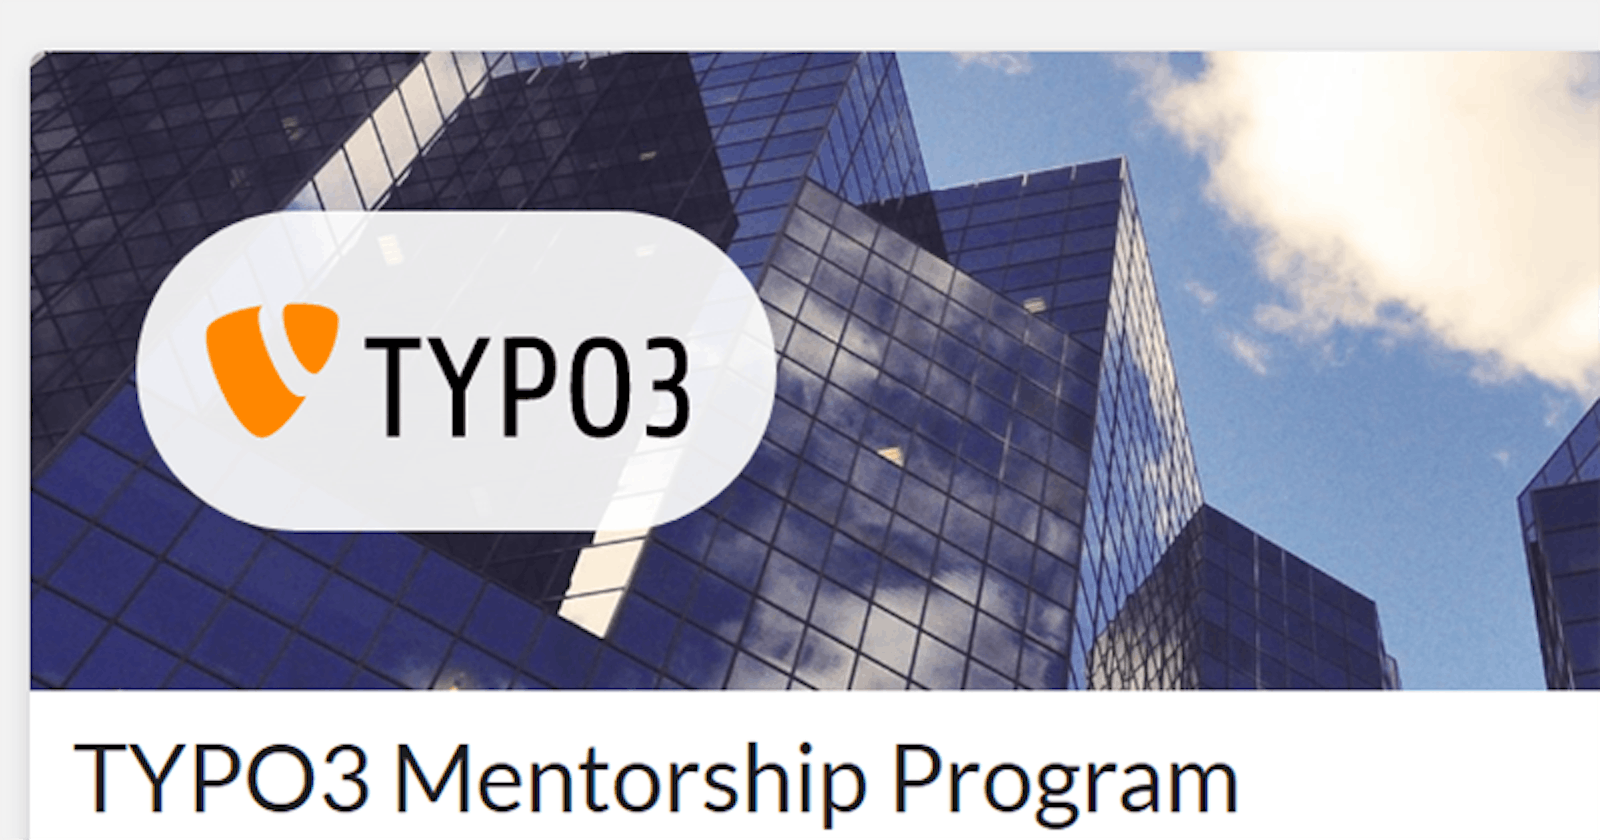 The Typo3 Mentorship Program